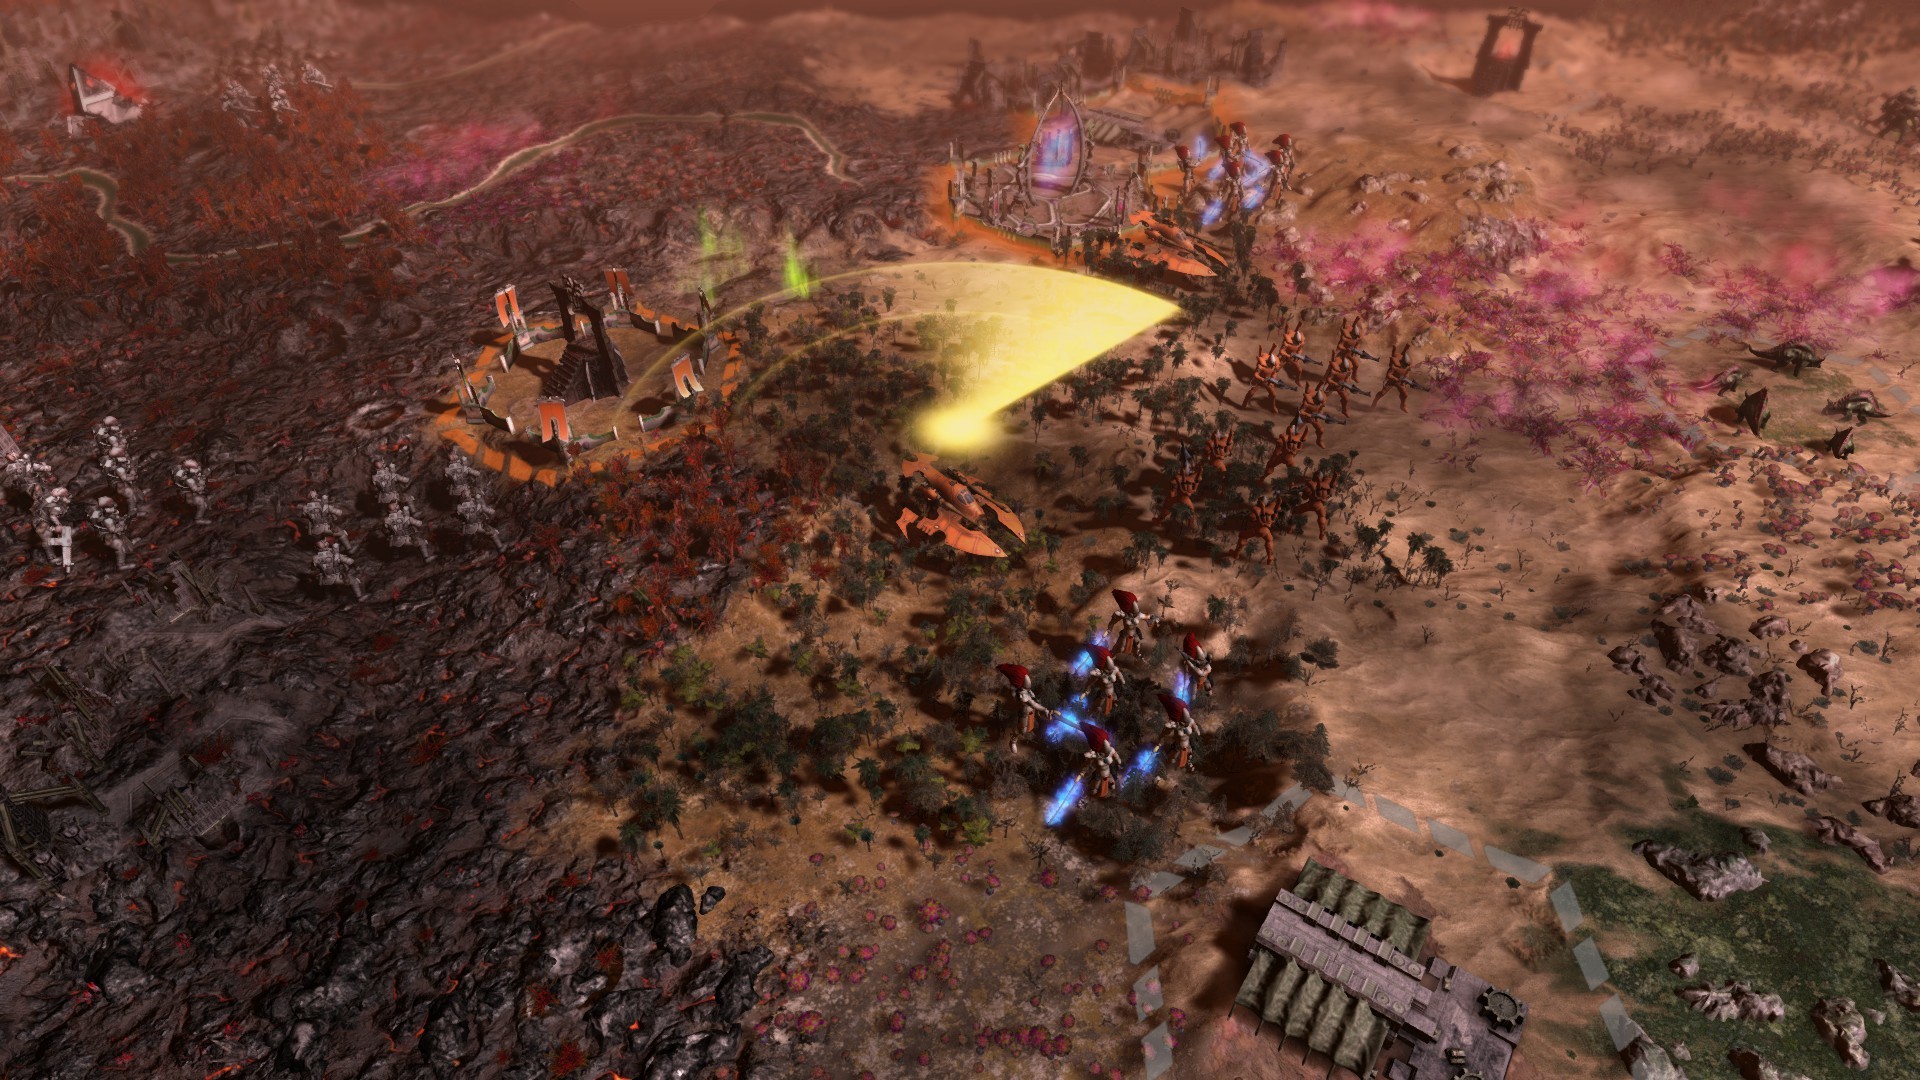 Warhammer 40,000: Gladius - Escalation Pack DLC Steam CD Key